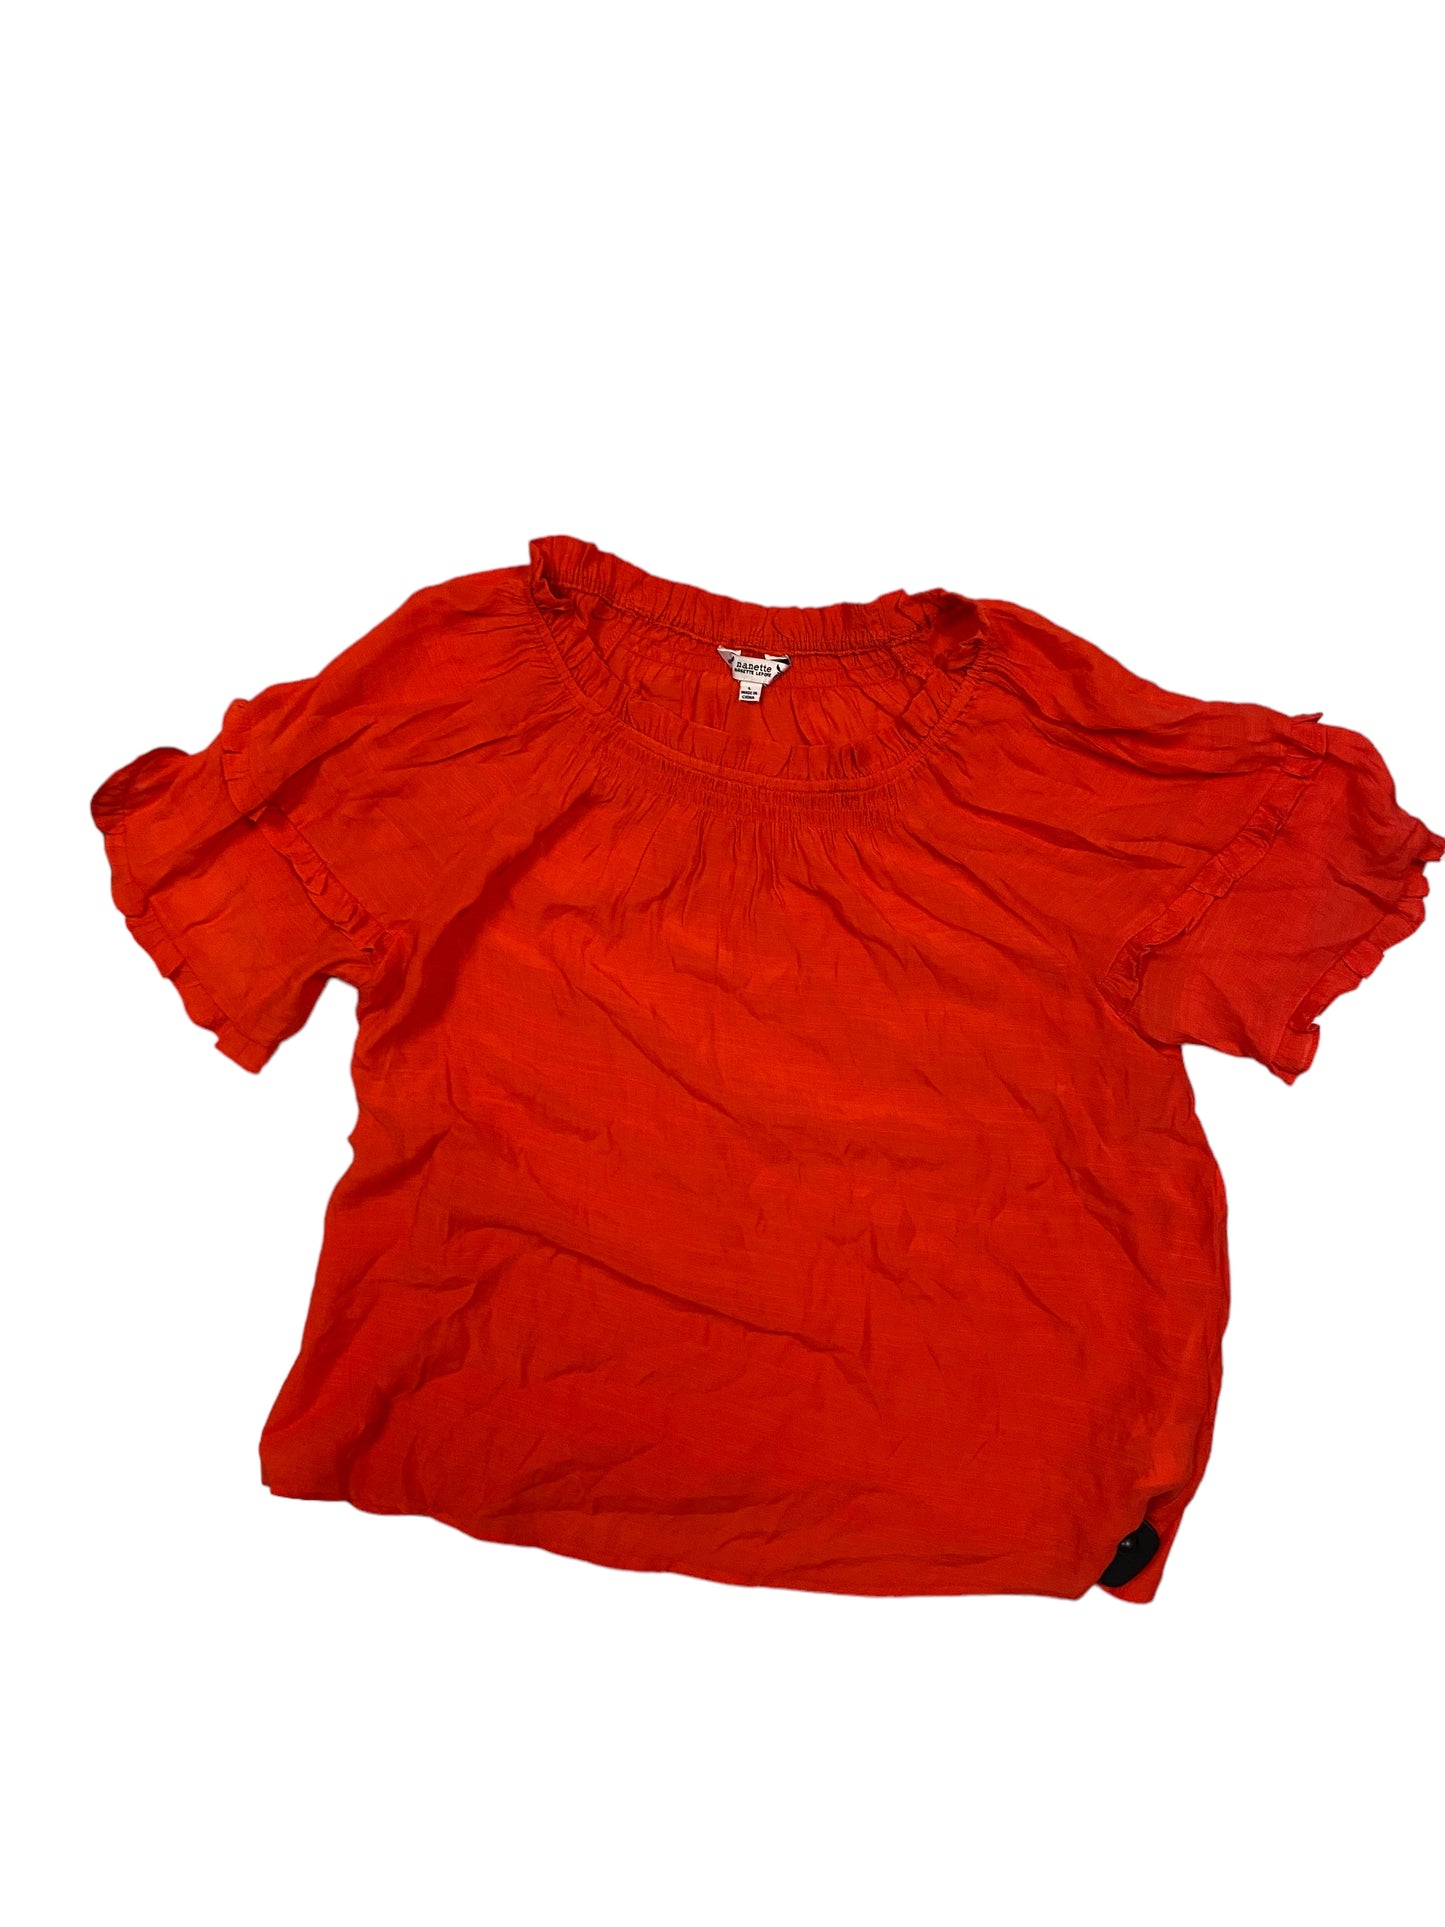 Red Top Short Sleeve Nanette Lepore, Size L